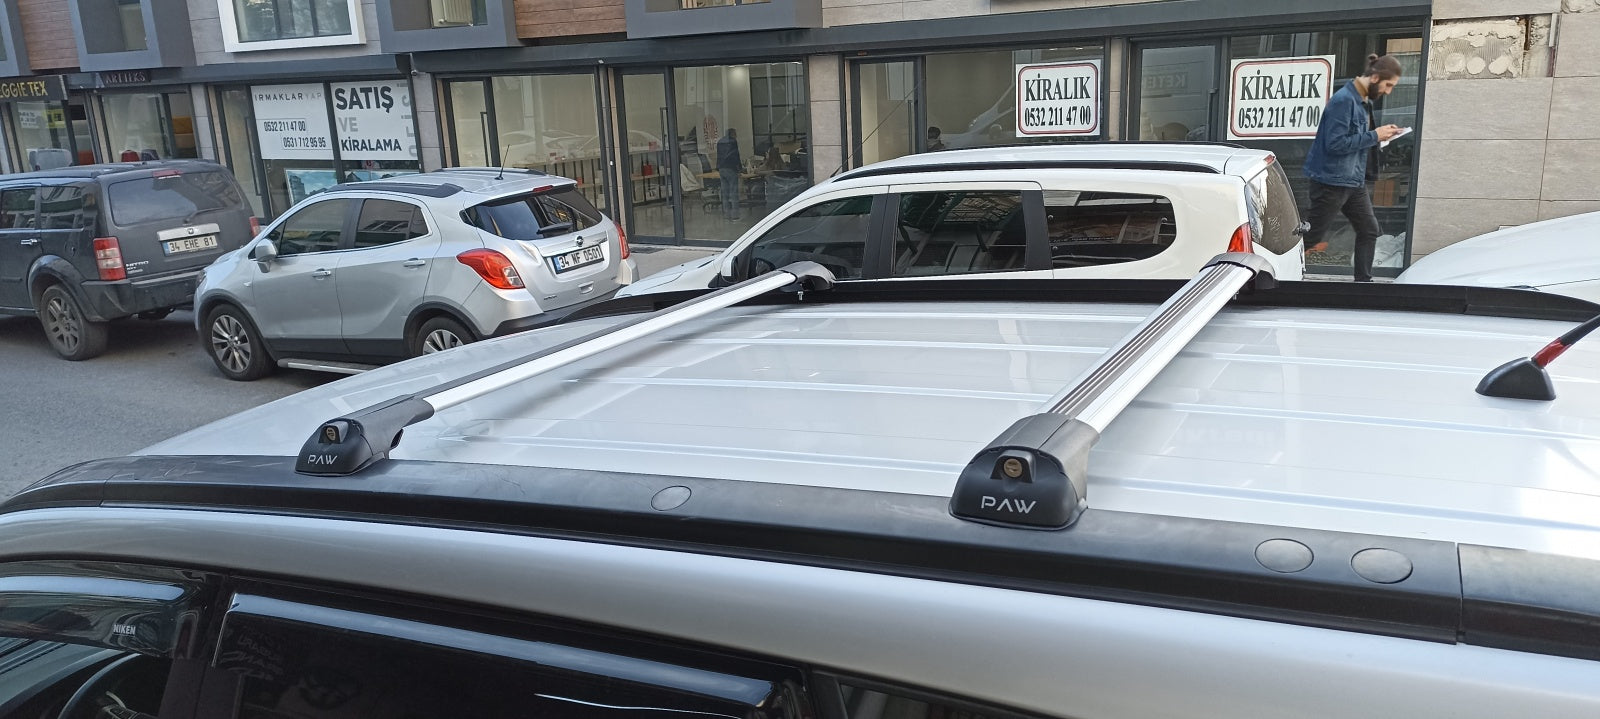 For Skoda Kodiaq 2017-Up Roof Rack System Carrier Cross Bars Aluminum Lockable High Quality of Metal Bracket Silver